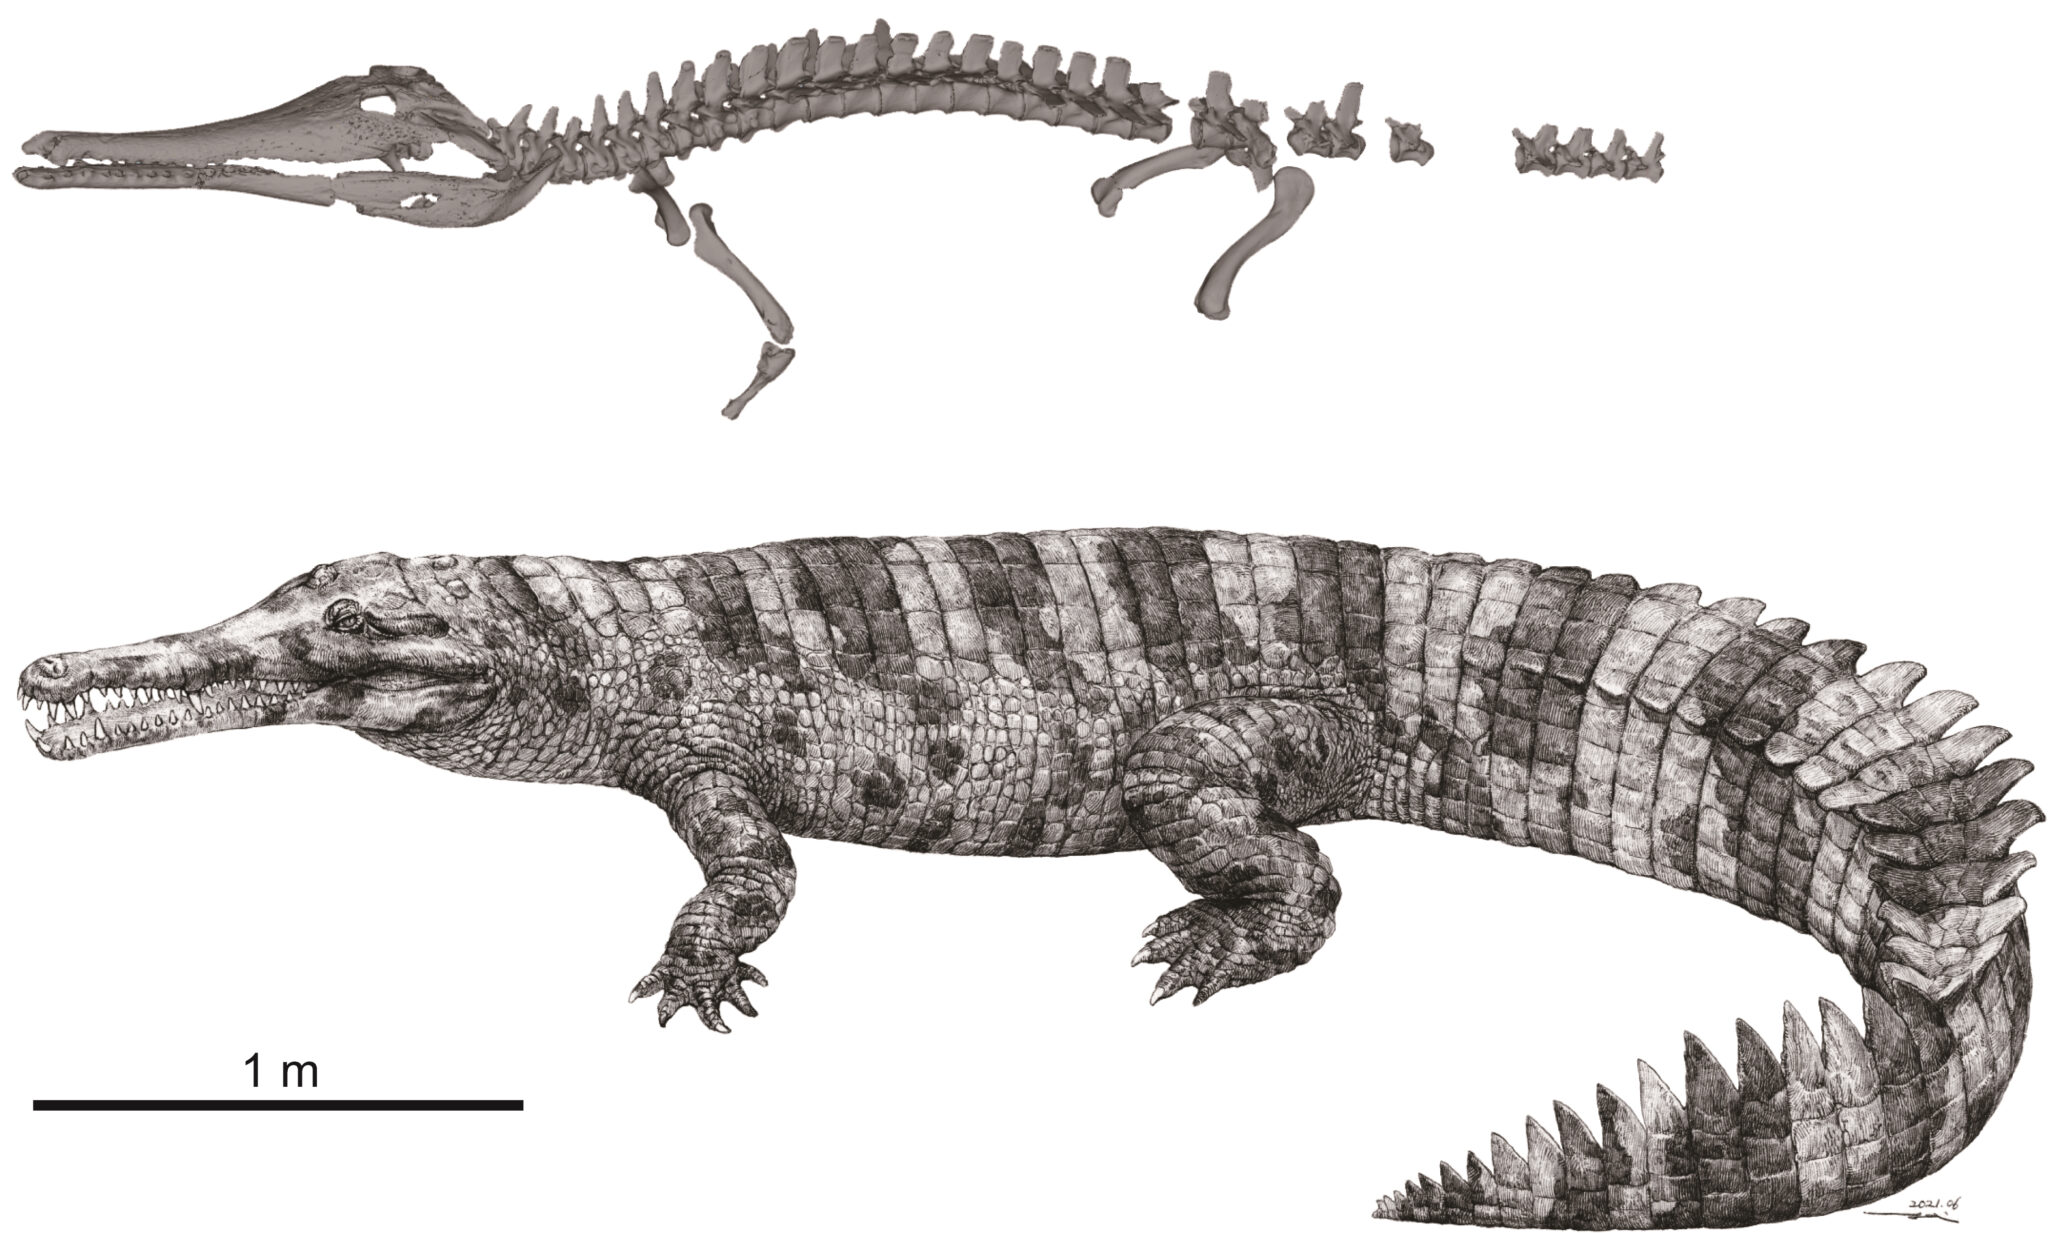 Extinct crocodilian may have been ritually beheaded